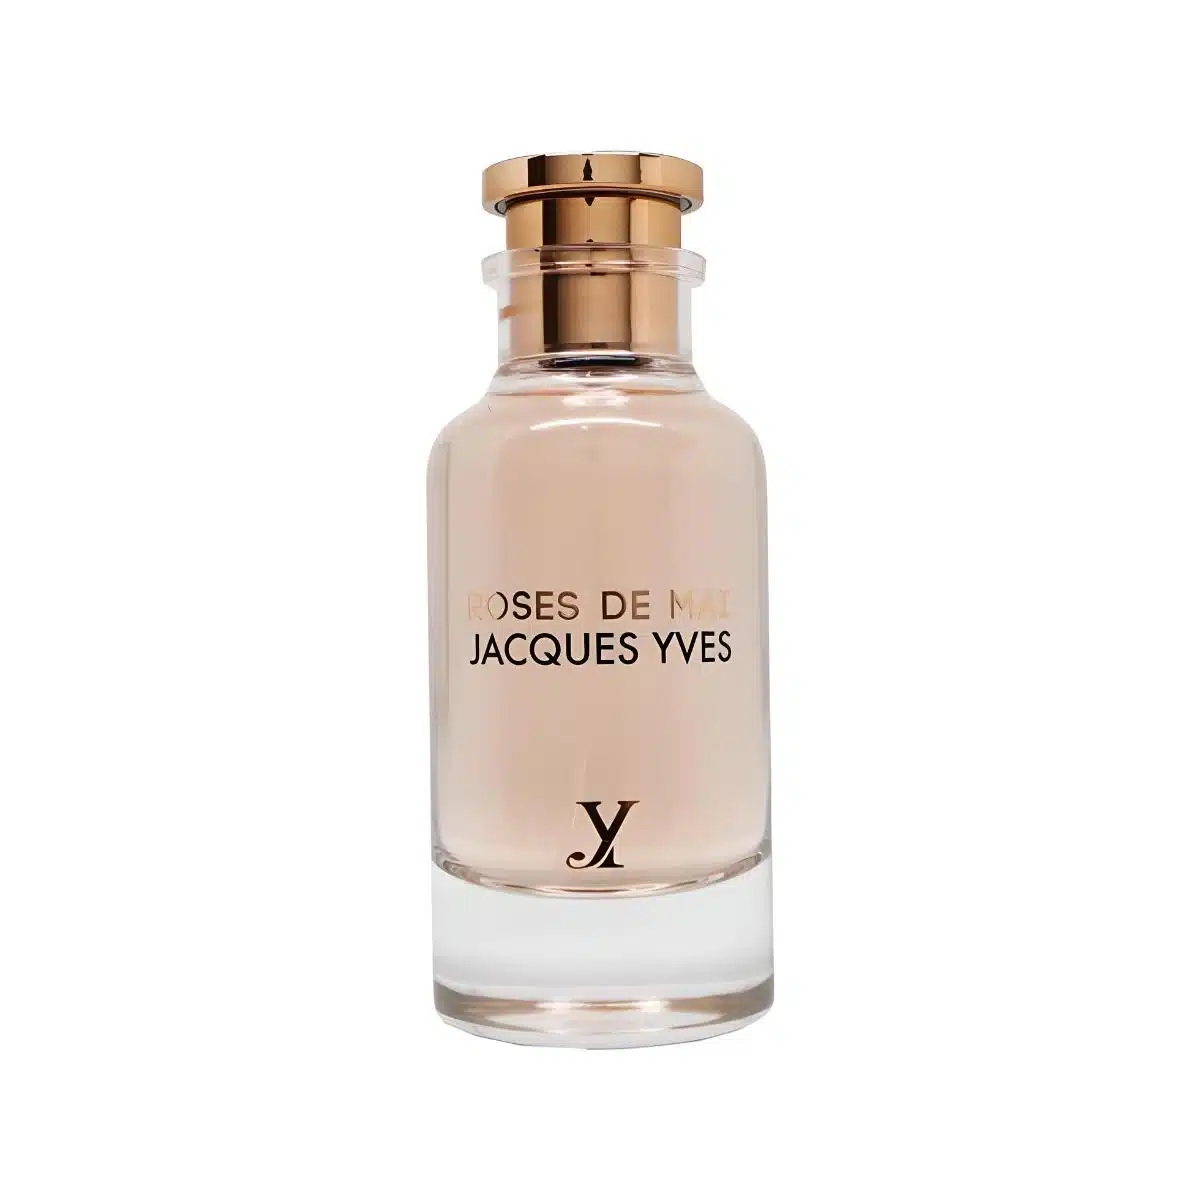 Roses De Mai Jacques Yves Perfume Eau De Parfum 100Ml By Fragrance World (Inspired By Fleur De Desert)